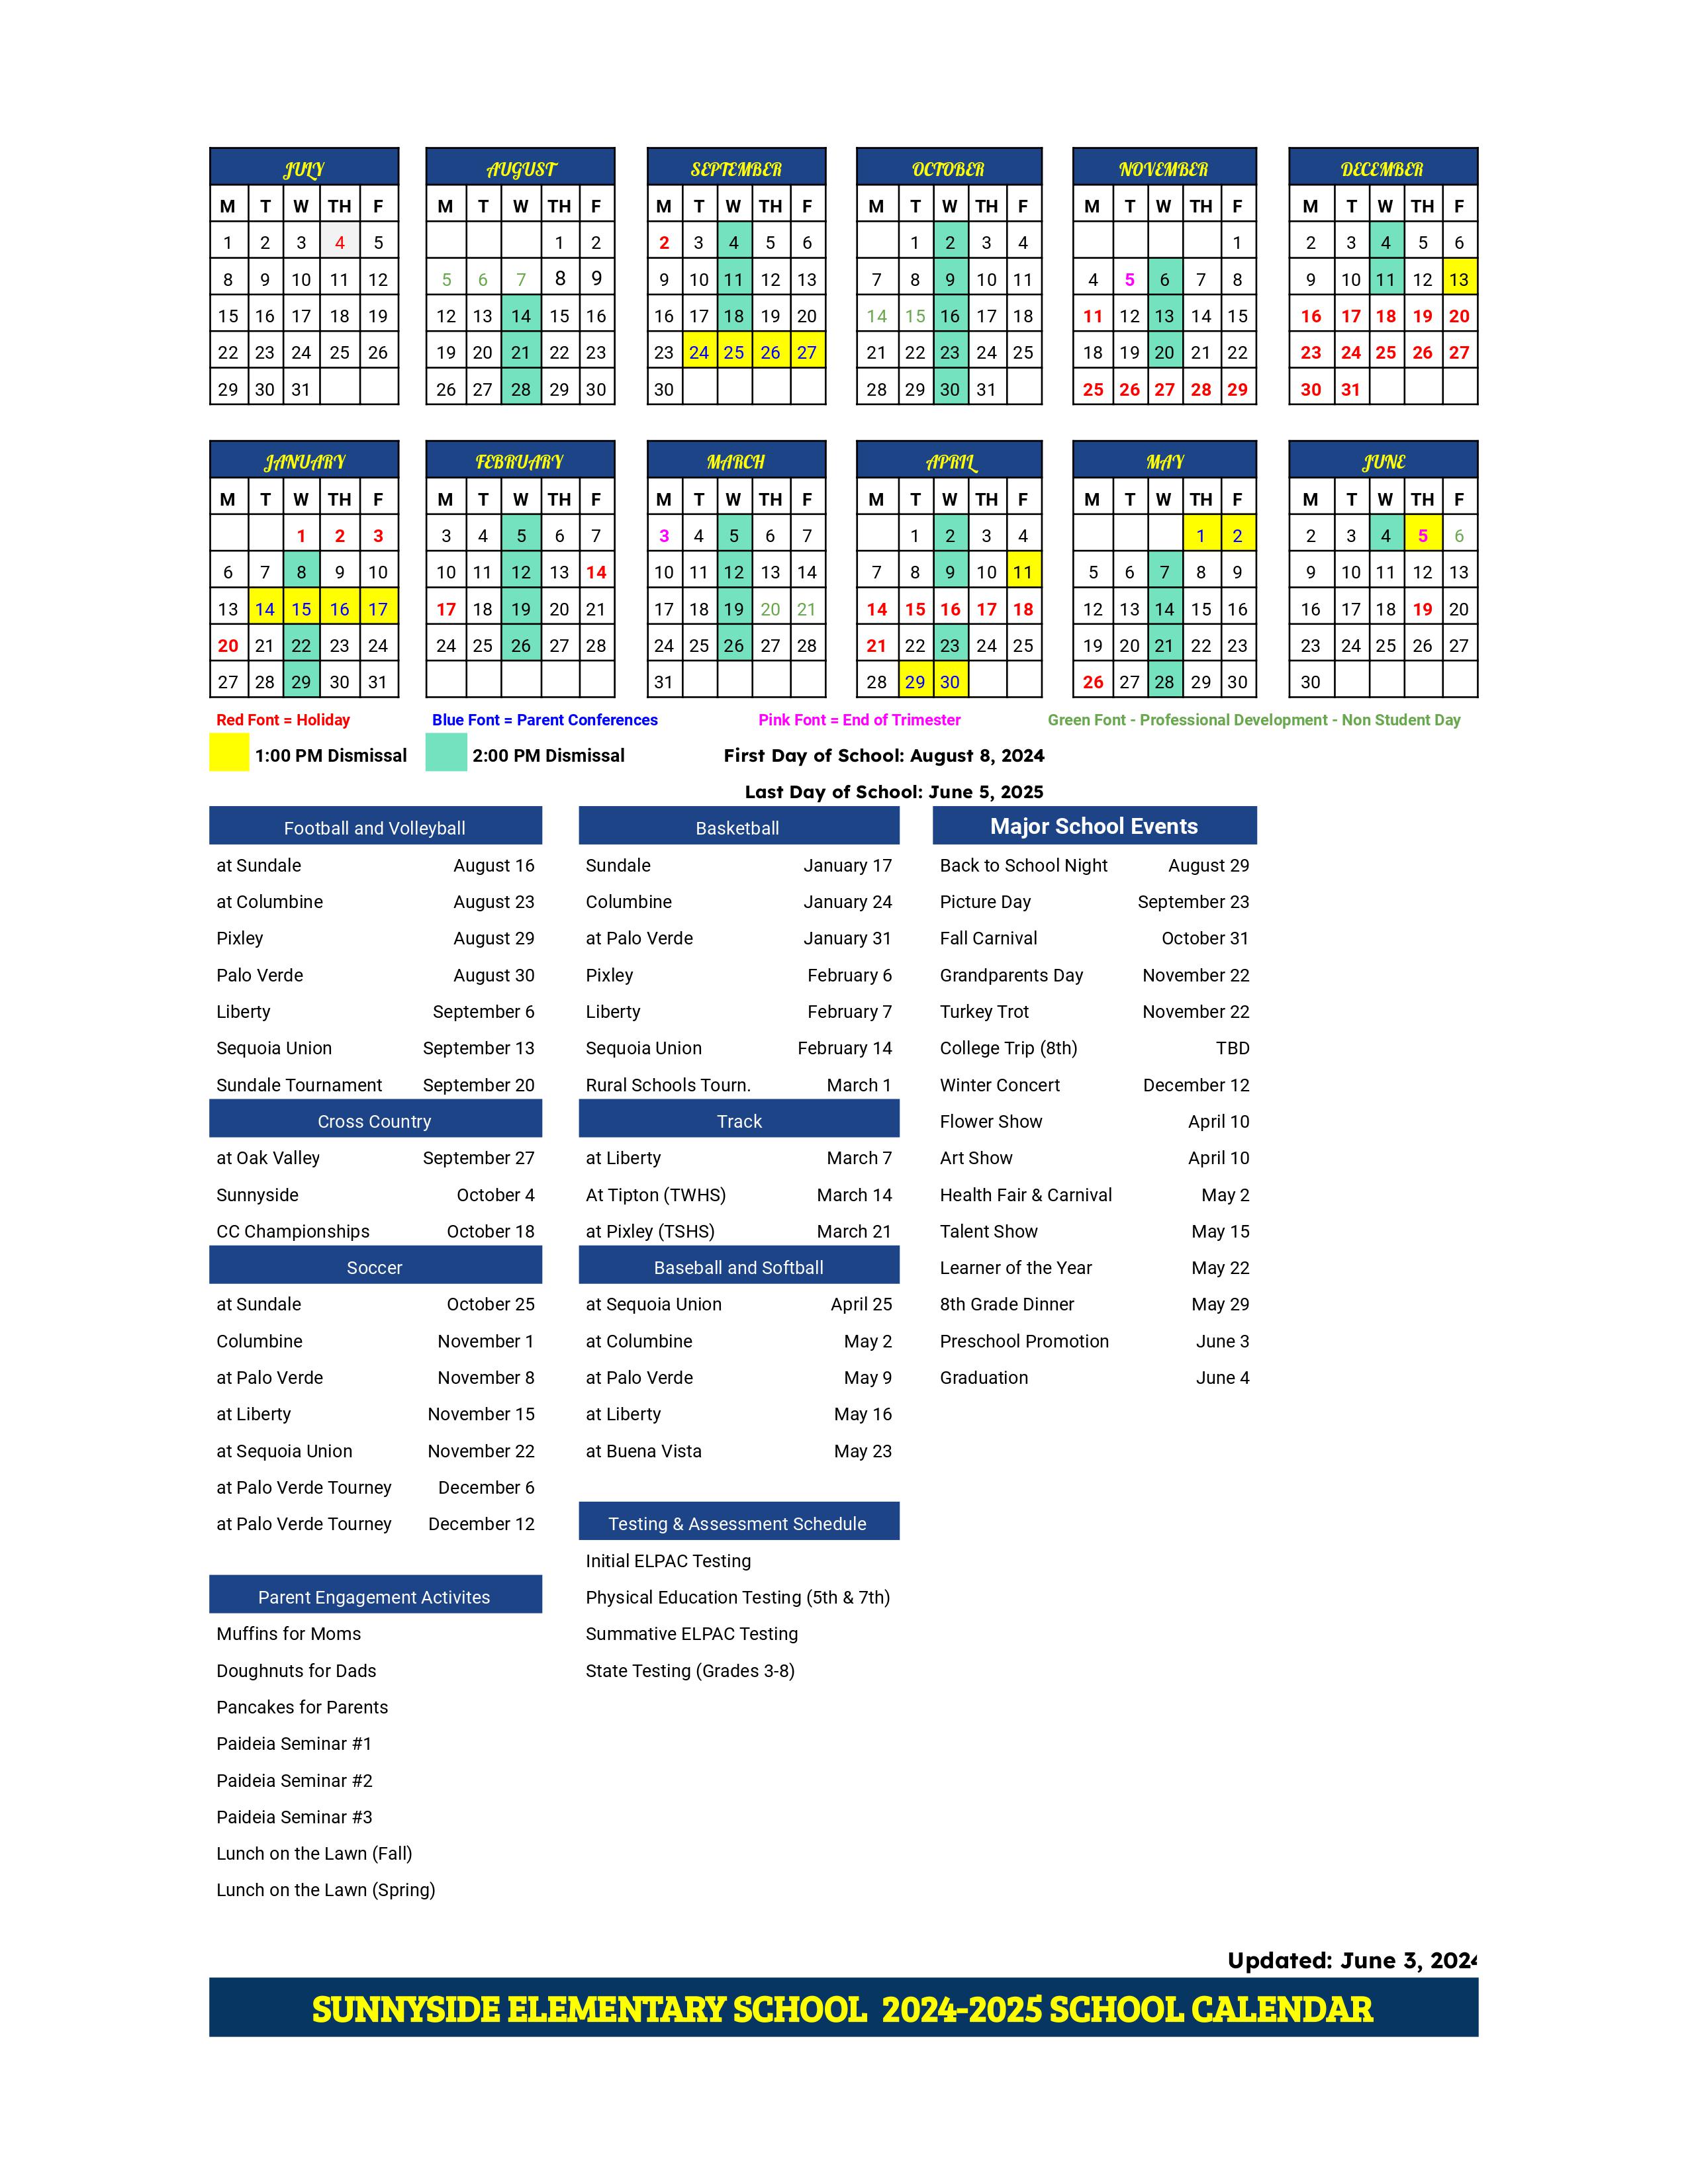 School Calendar 2024-2025